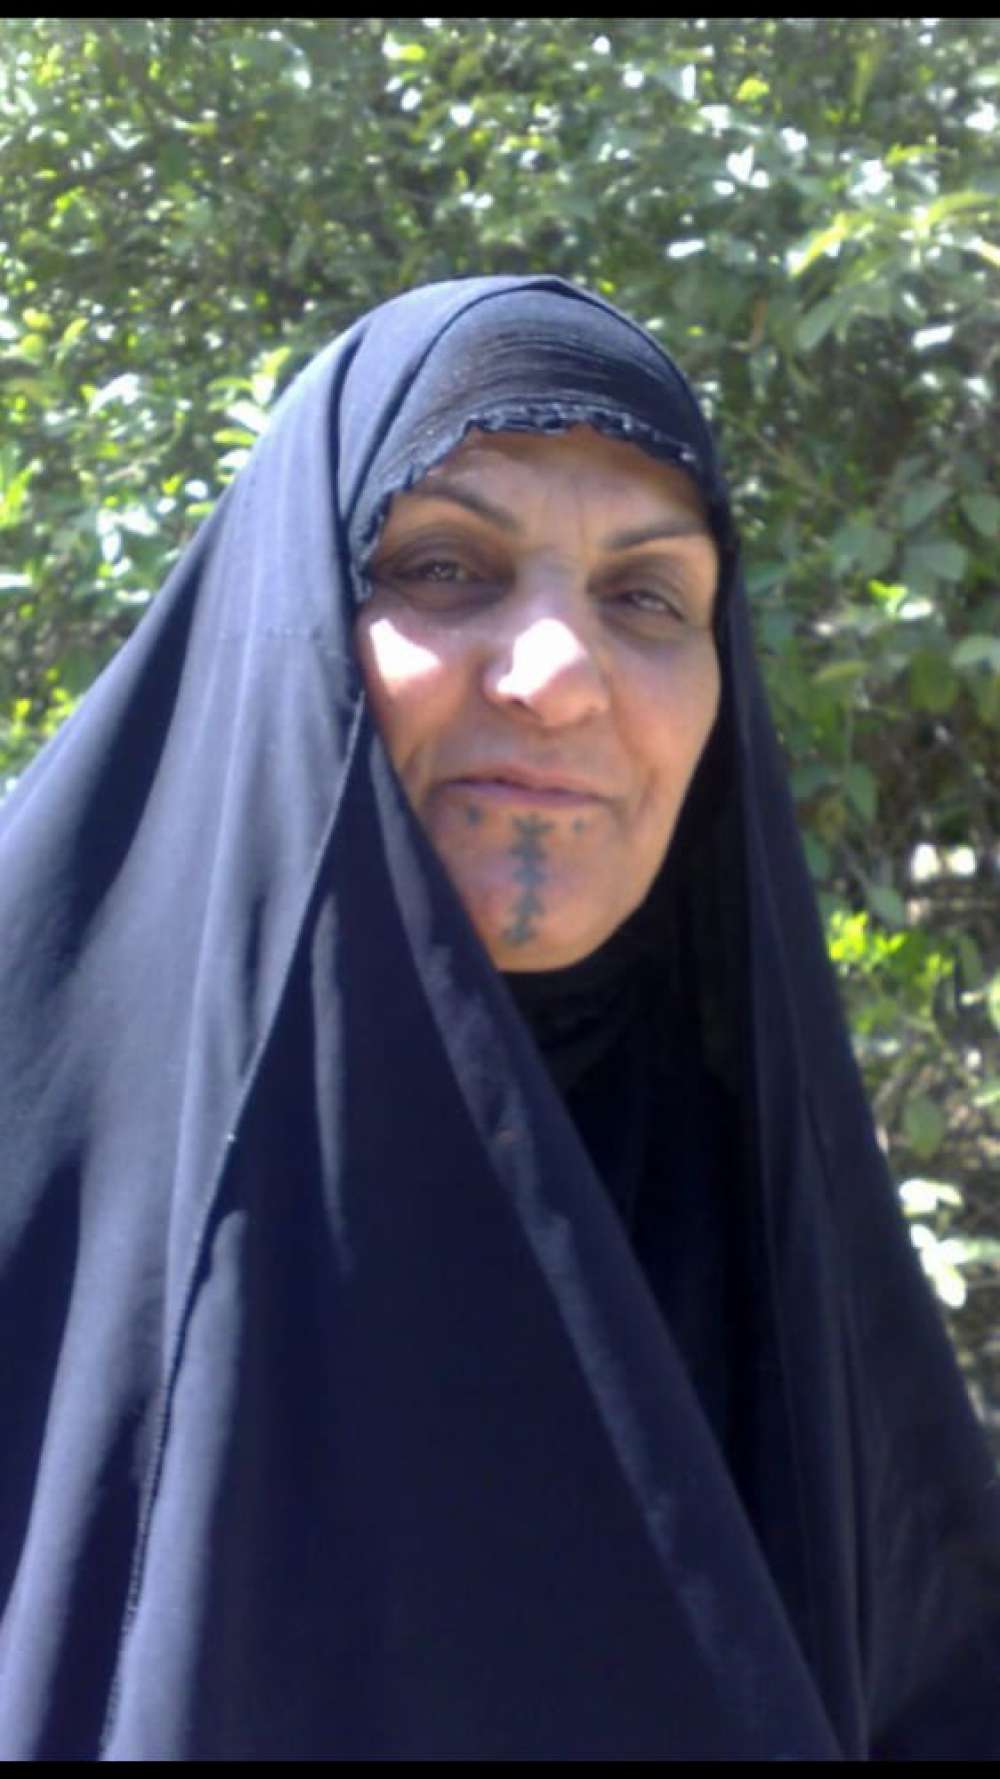 همسر حاج کریم ذبیح سکینه شریف